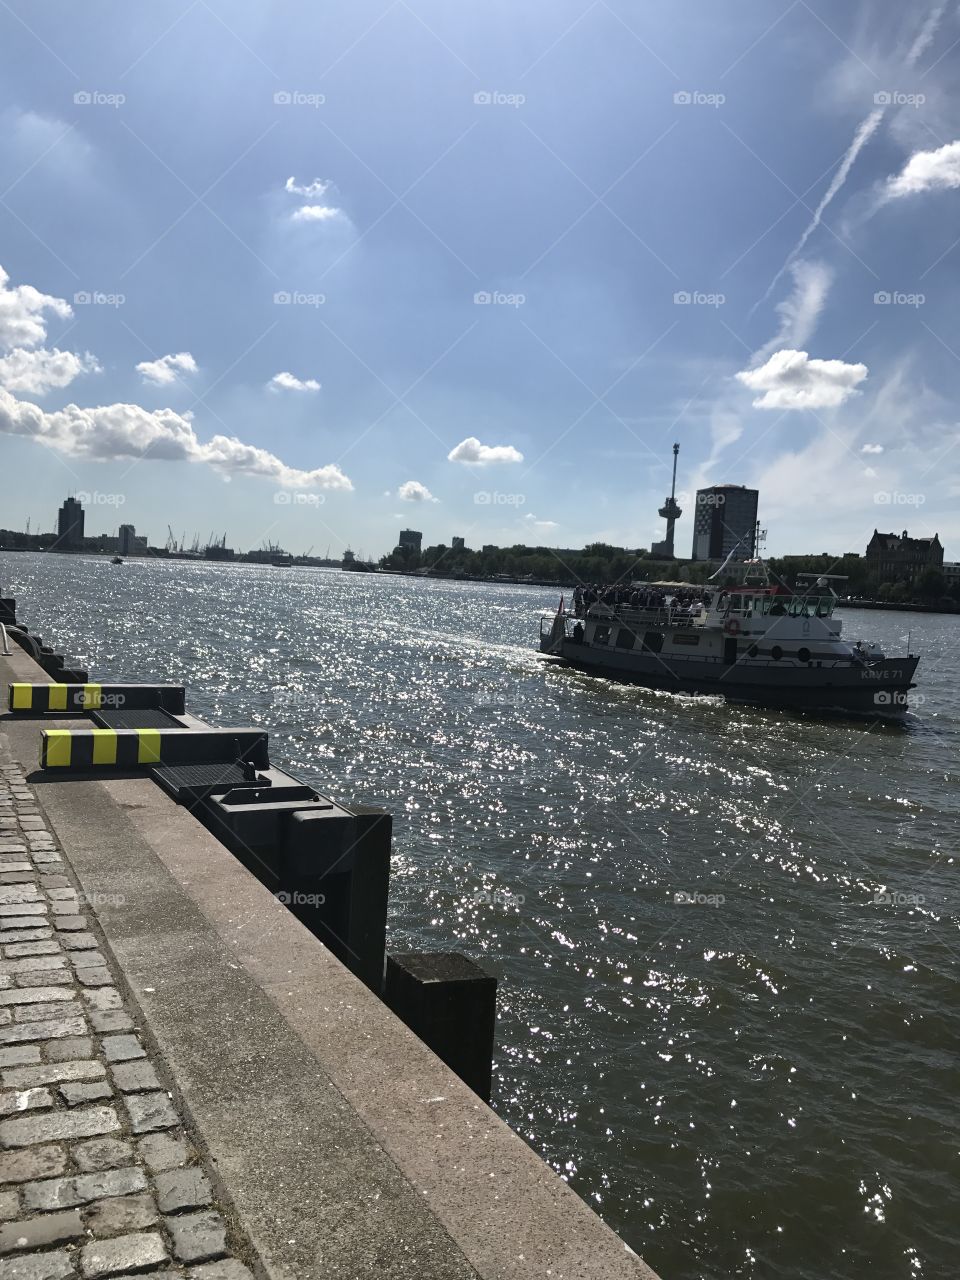 Tug
Water
Canal 
Rotterdam 
Dock